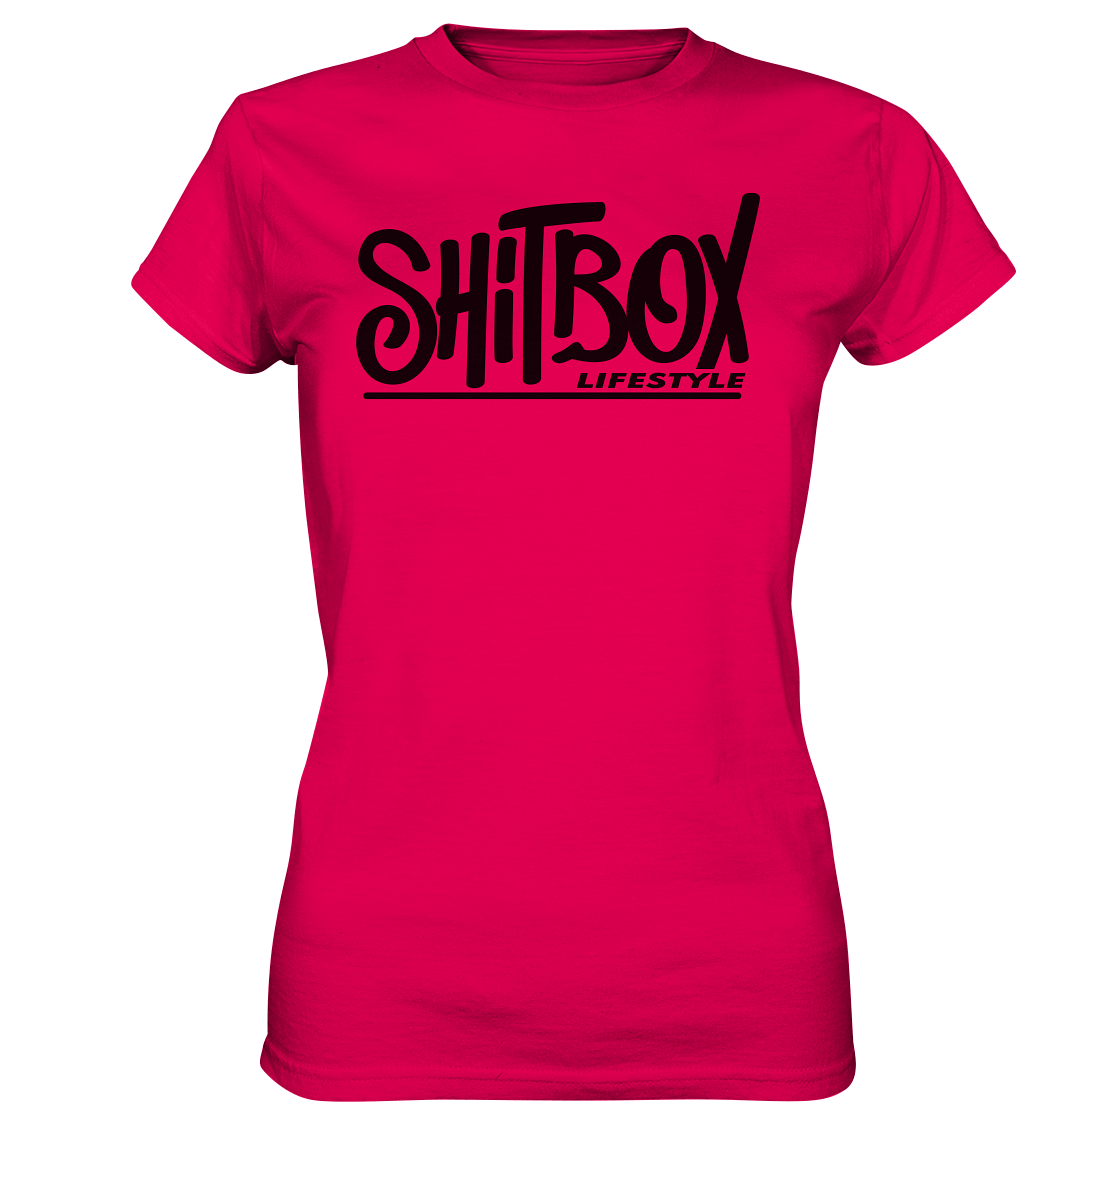 Shitbox Lifestyle Logo - Ladies Premium Shirt - MotoMerch.de